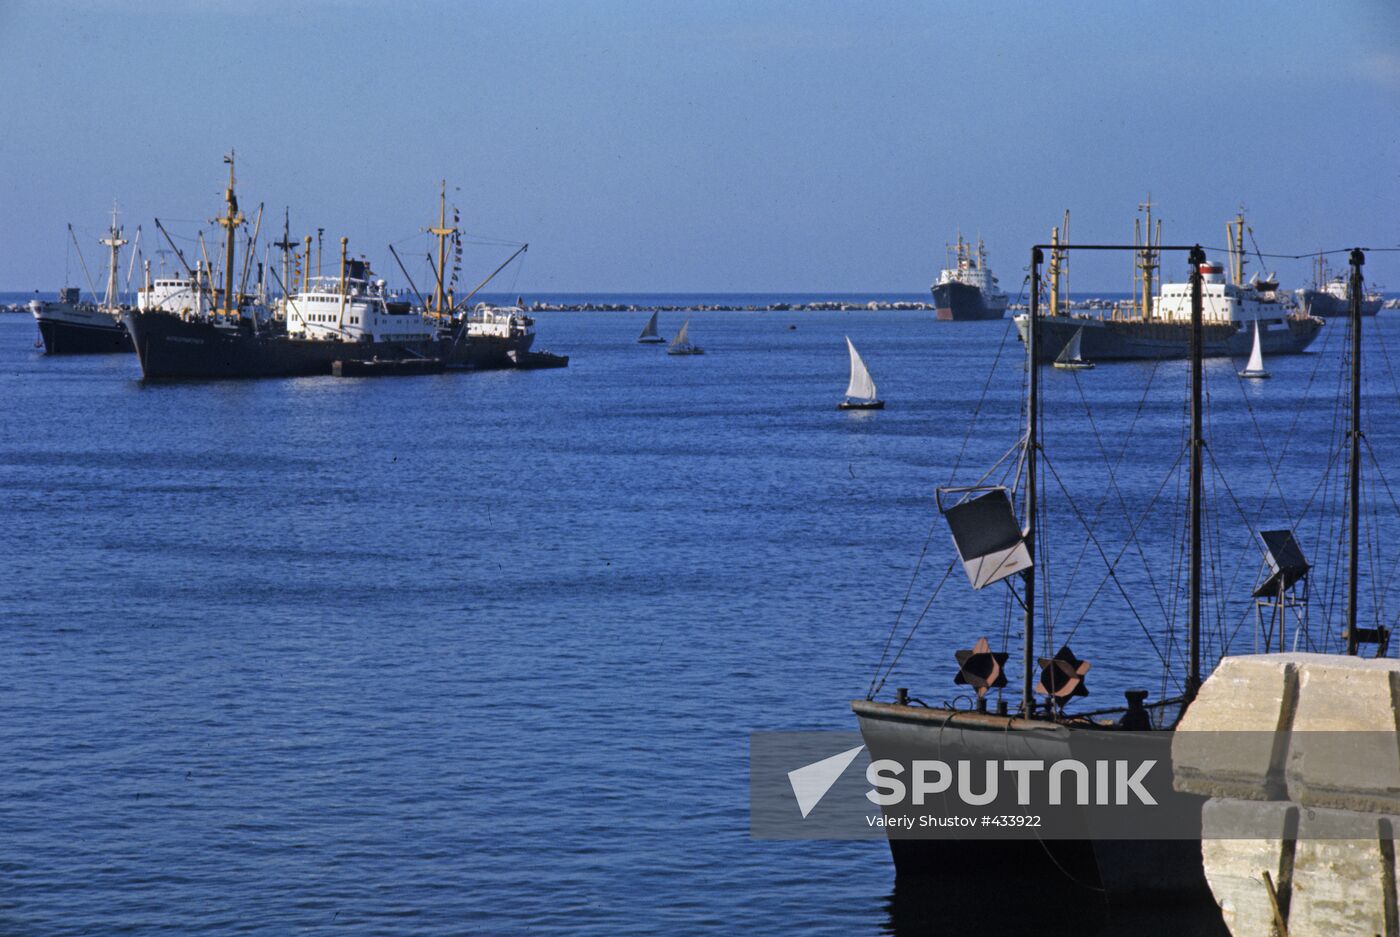 Alexandrian seaport